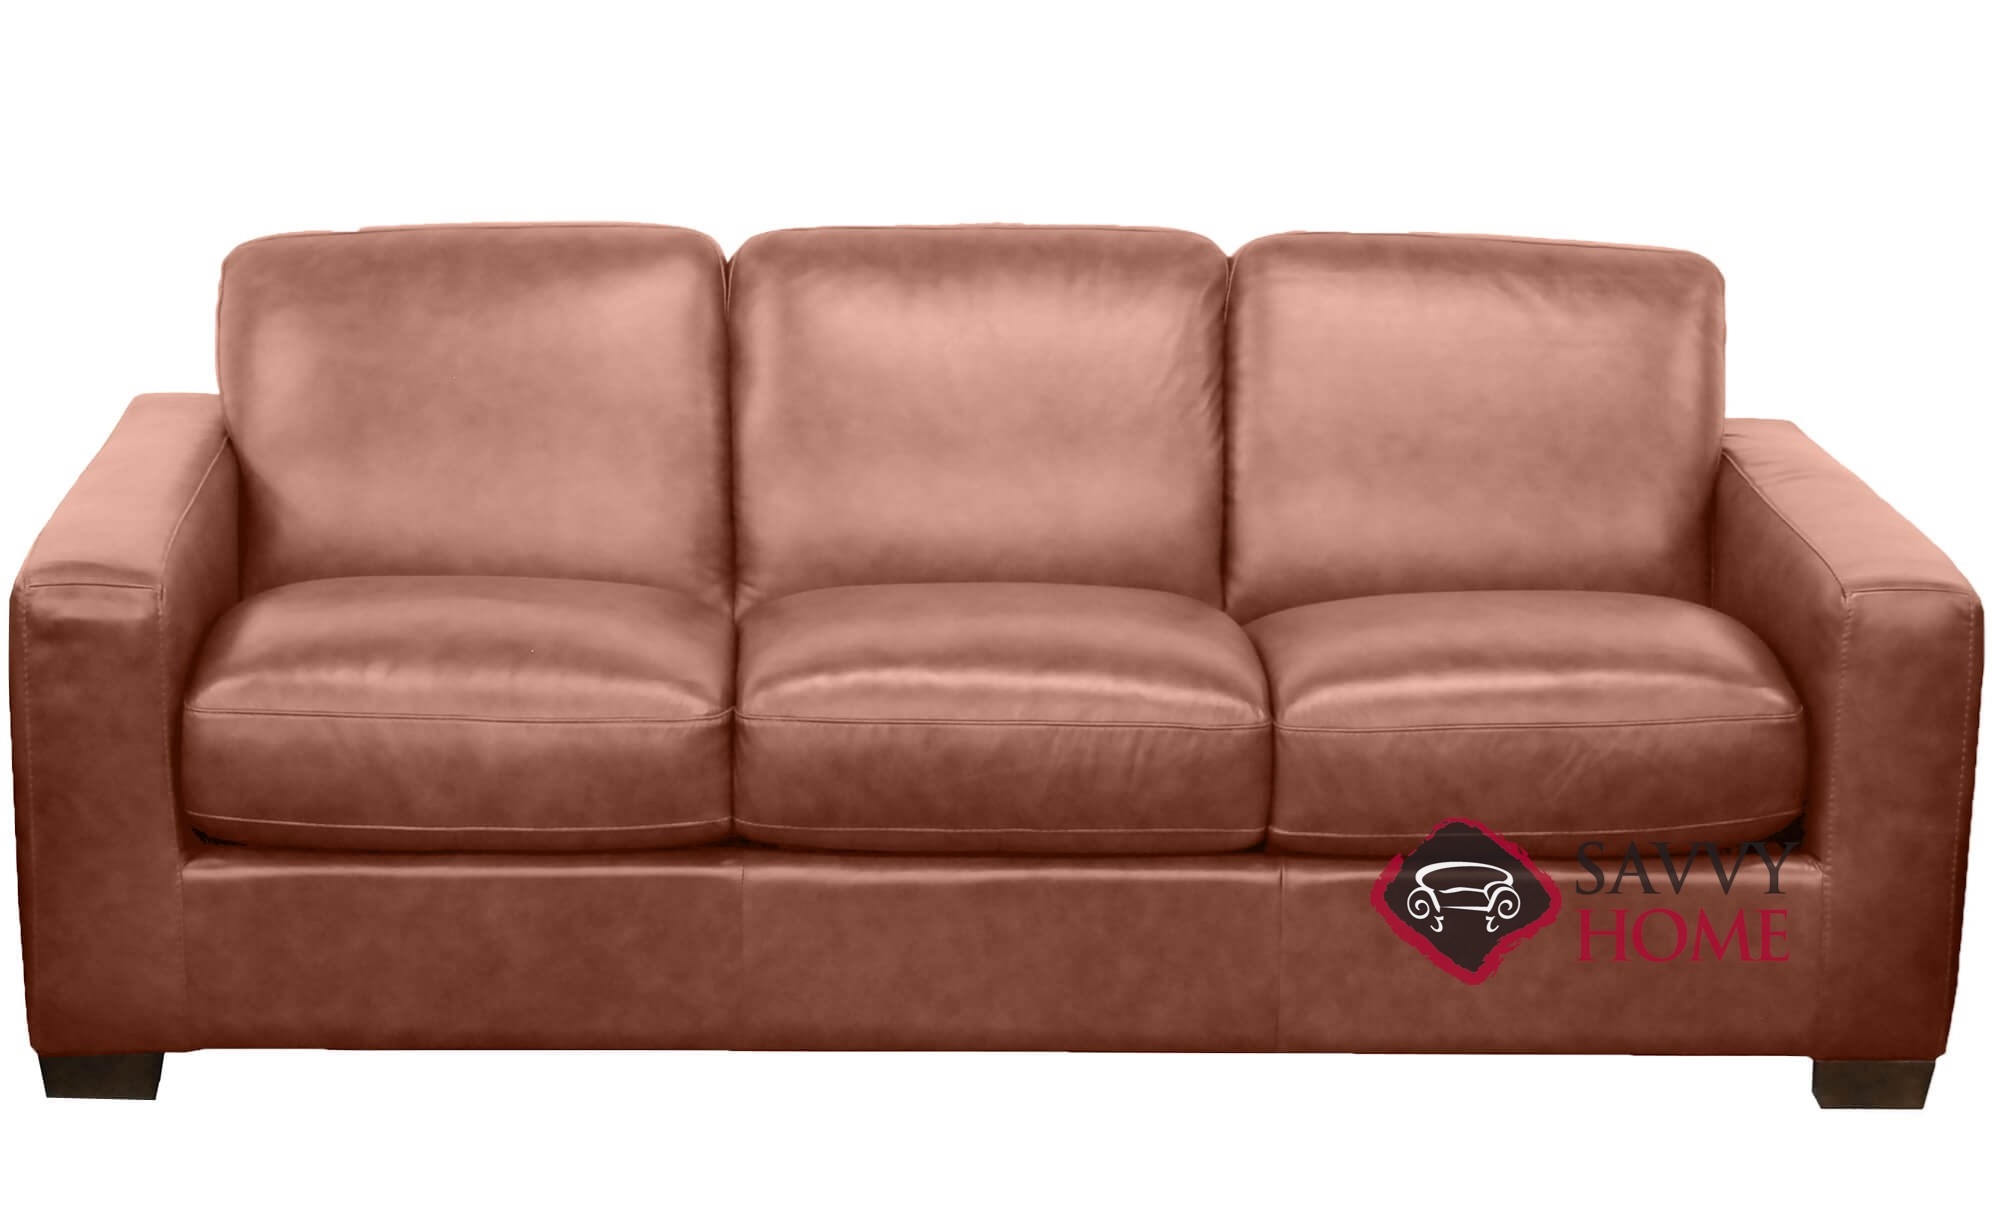 quick ship leather sleeper sofa